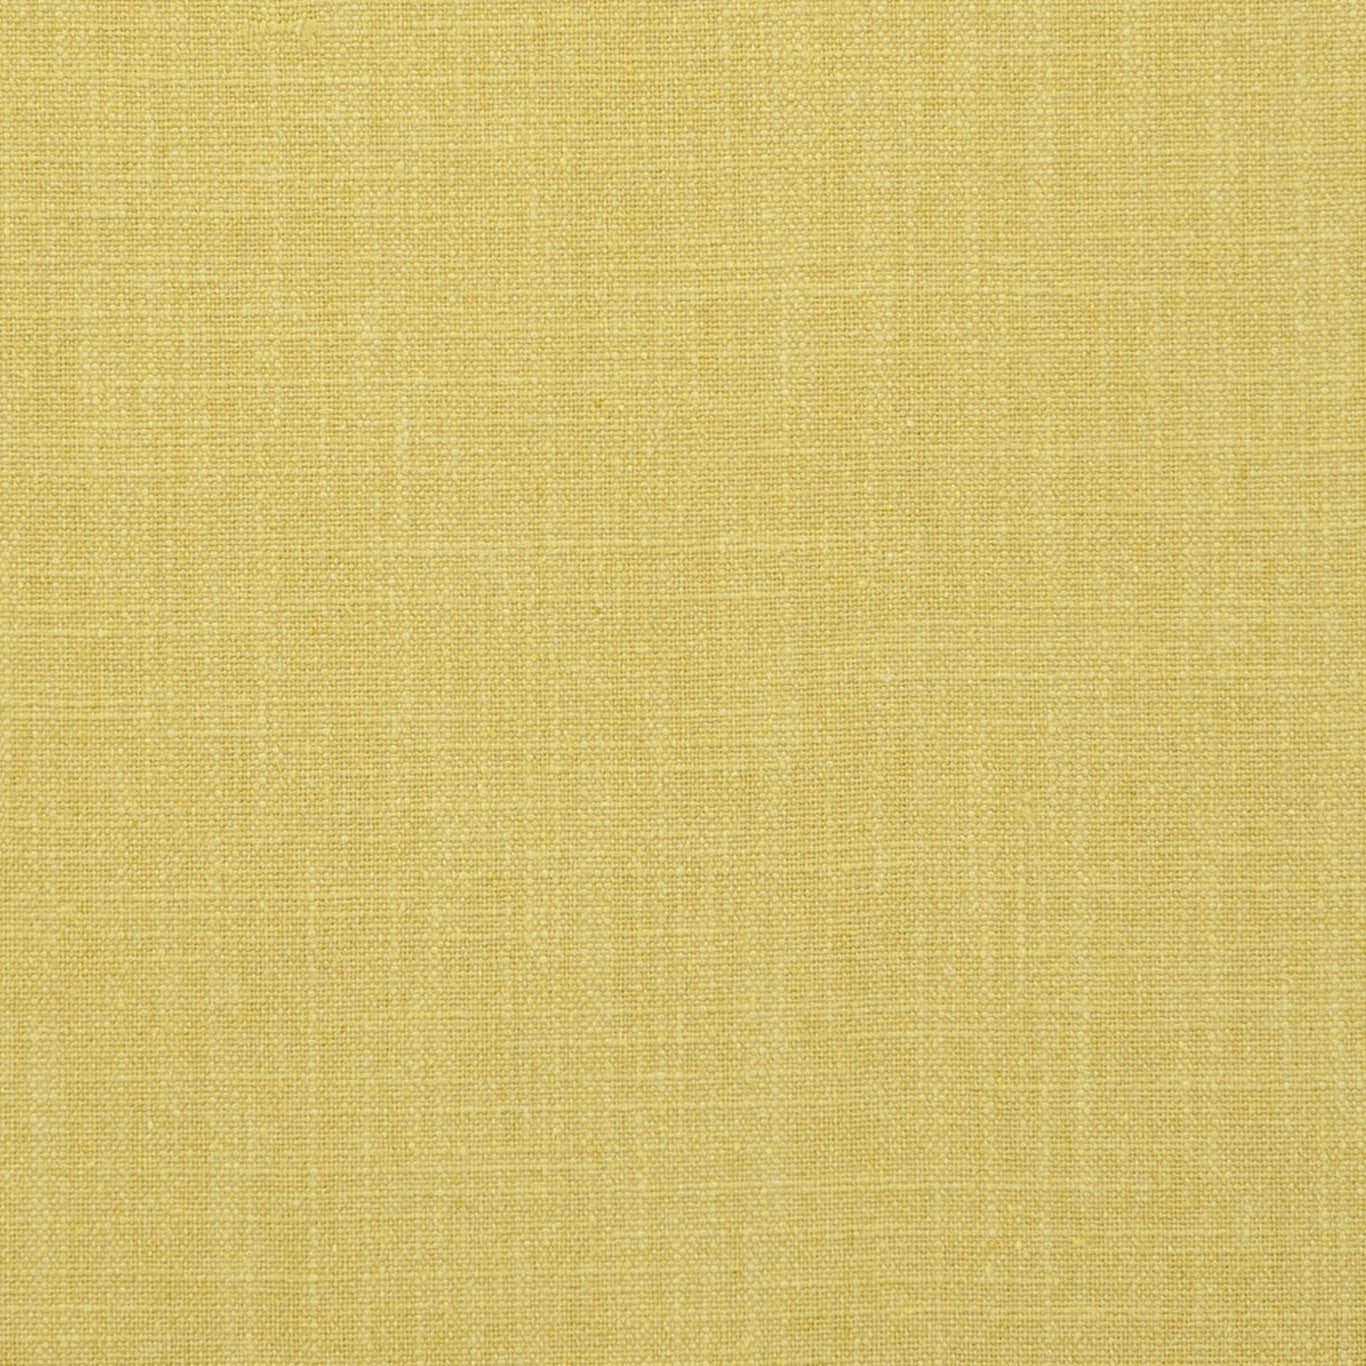 Easton Fabric by Clarke & Clarke - F0736/01 - Acacia